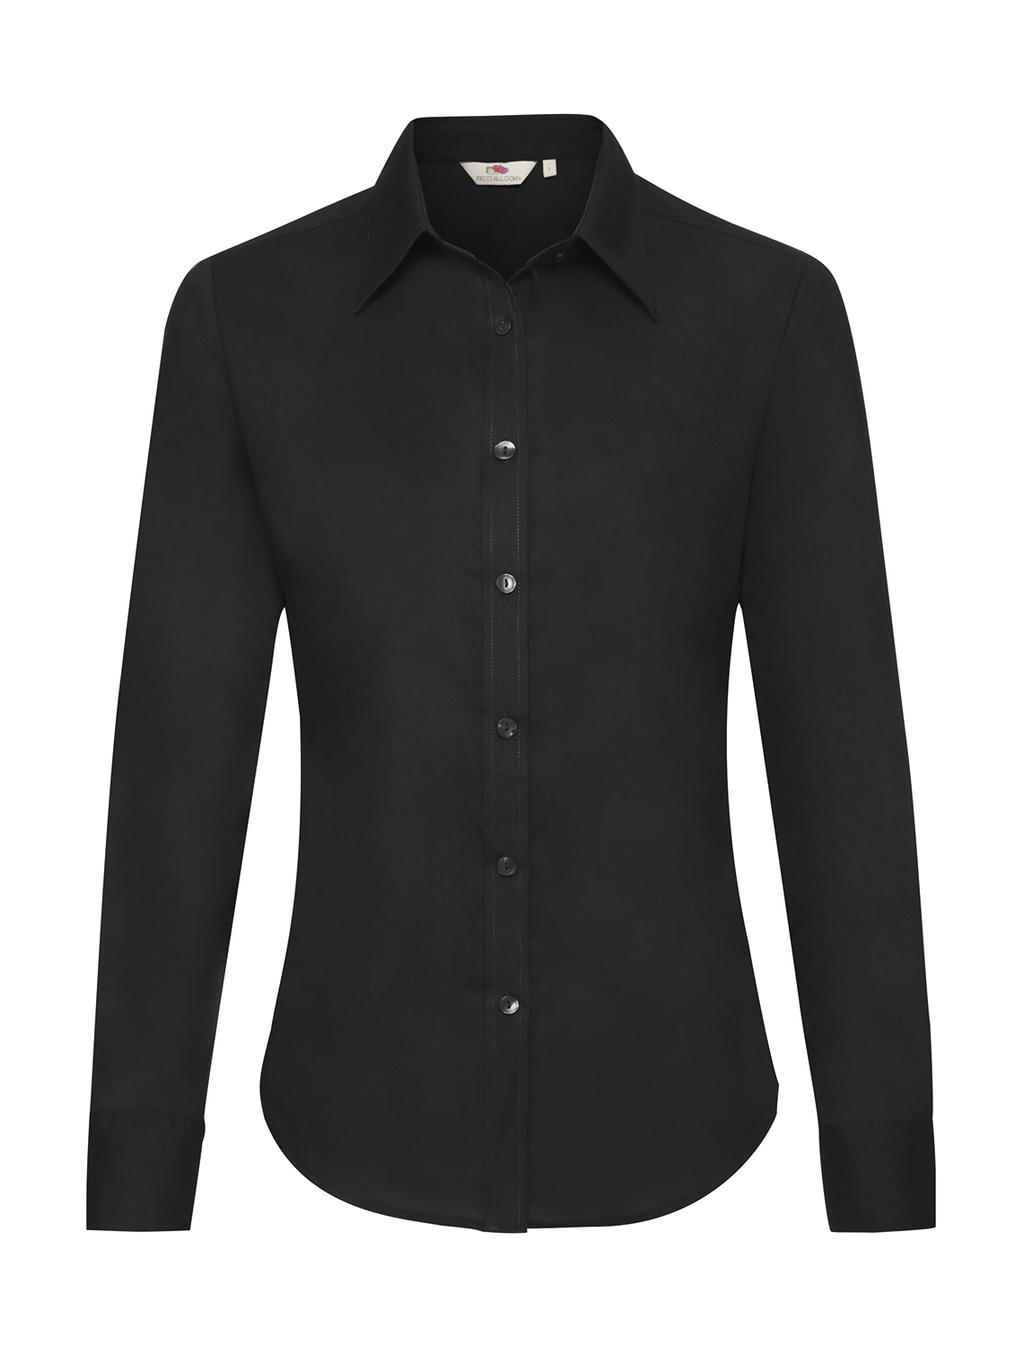  Ladies Oxford Shirt LS in Farbe Black